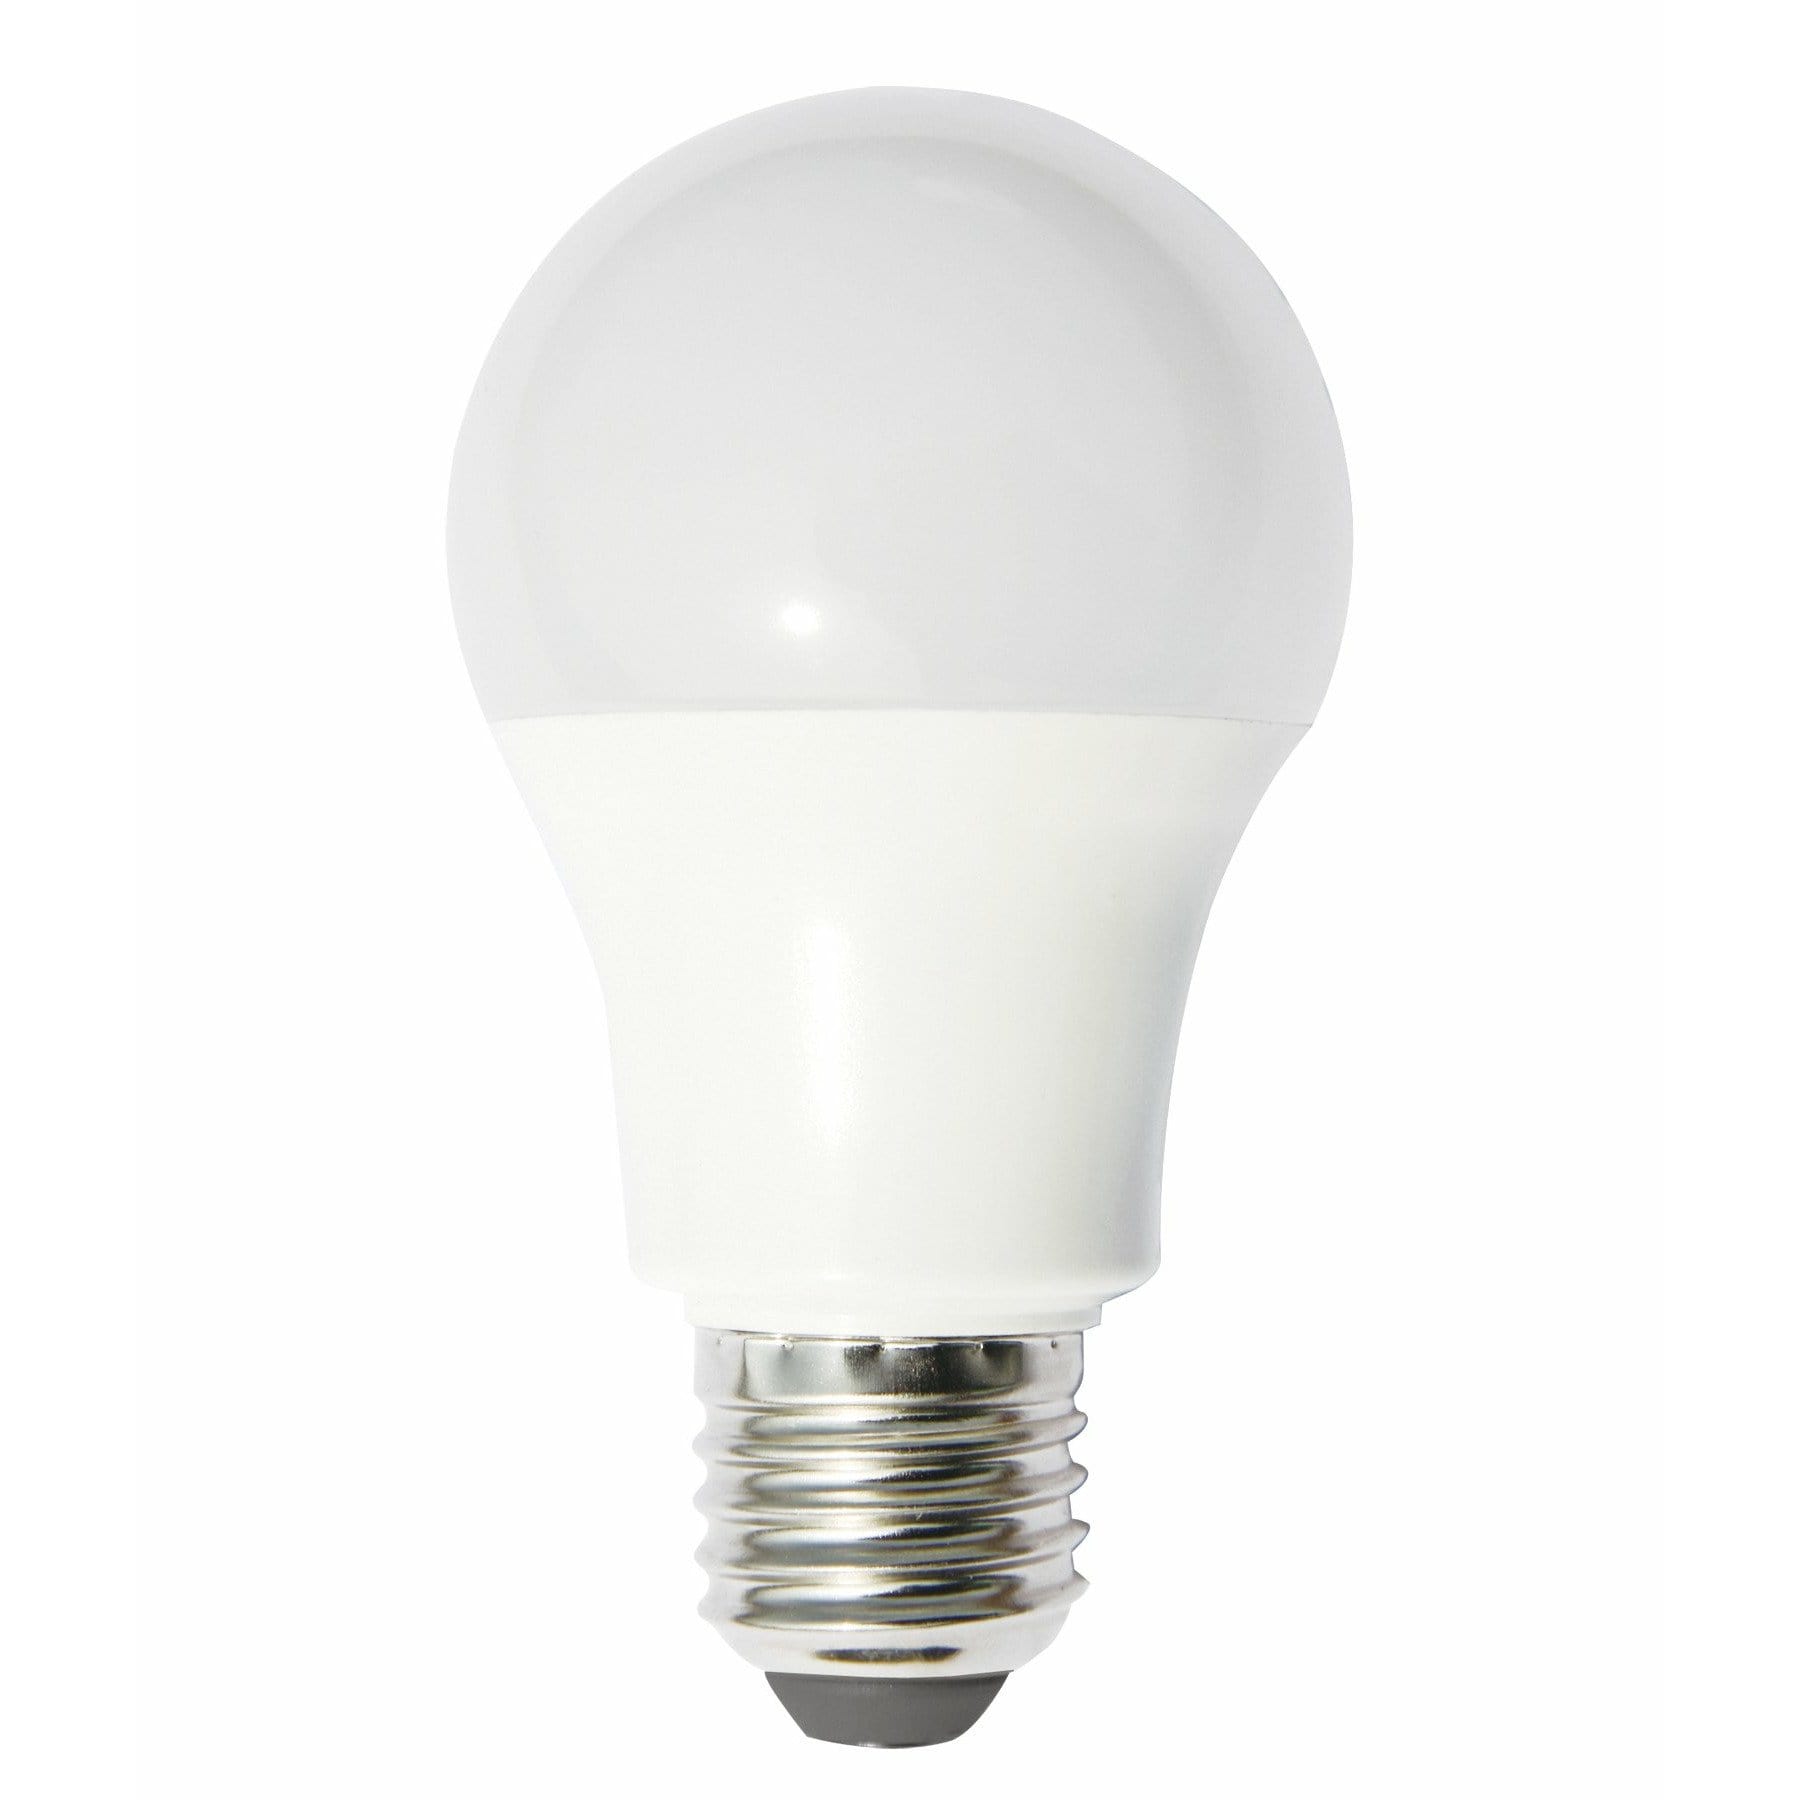 Mirabella LED GLS Light Bulb E27 9W Warm White I000602 - Double Bay Hardware